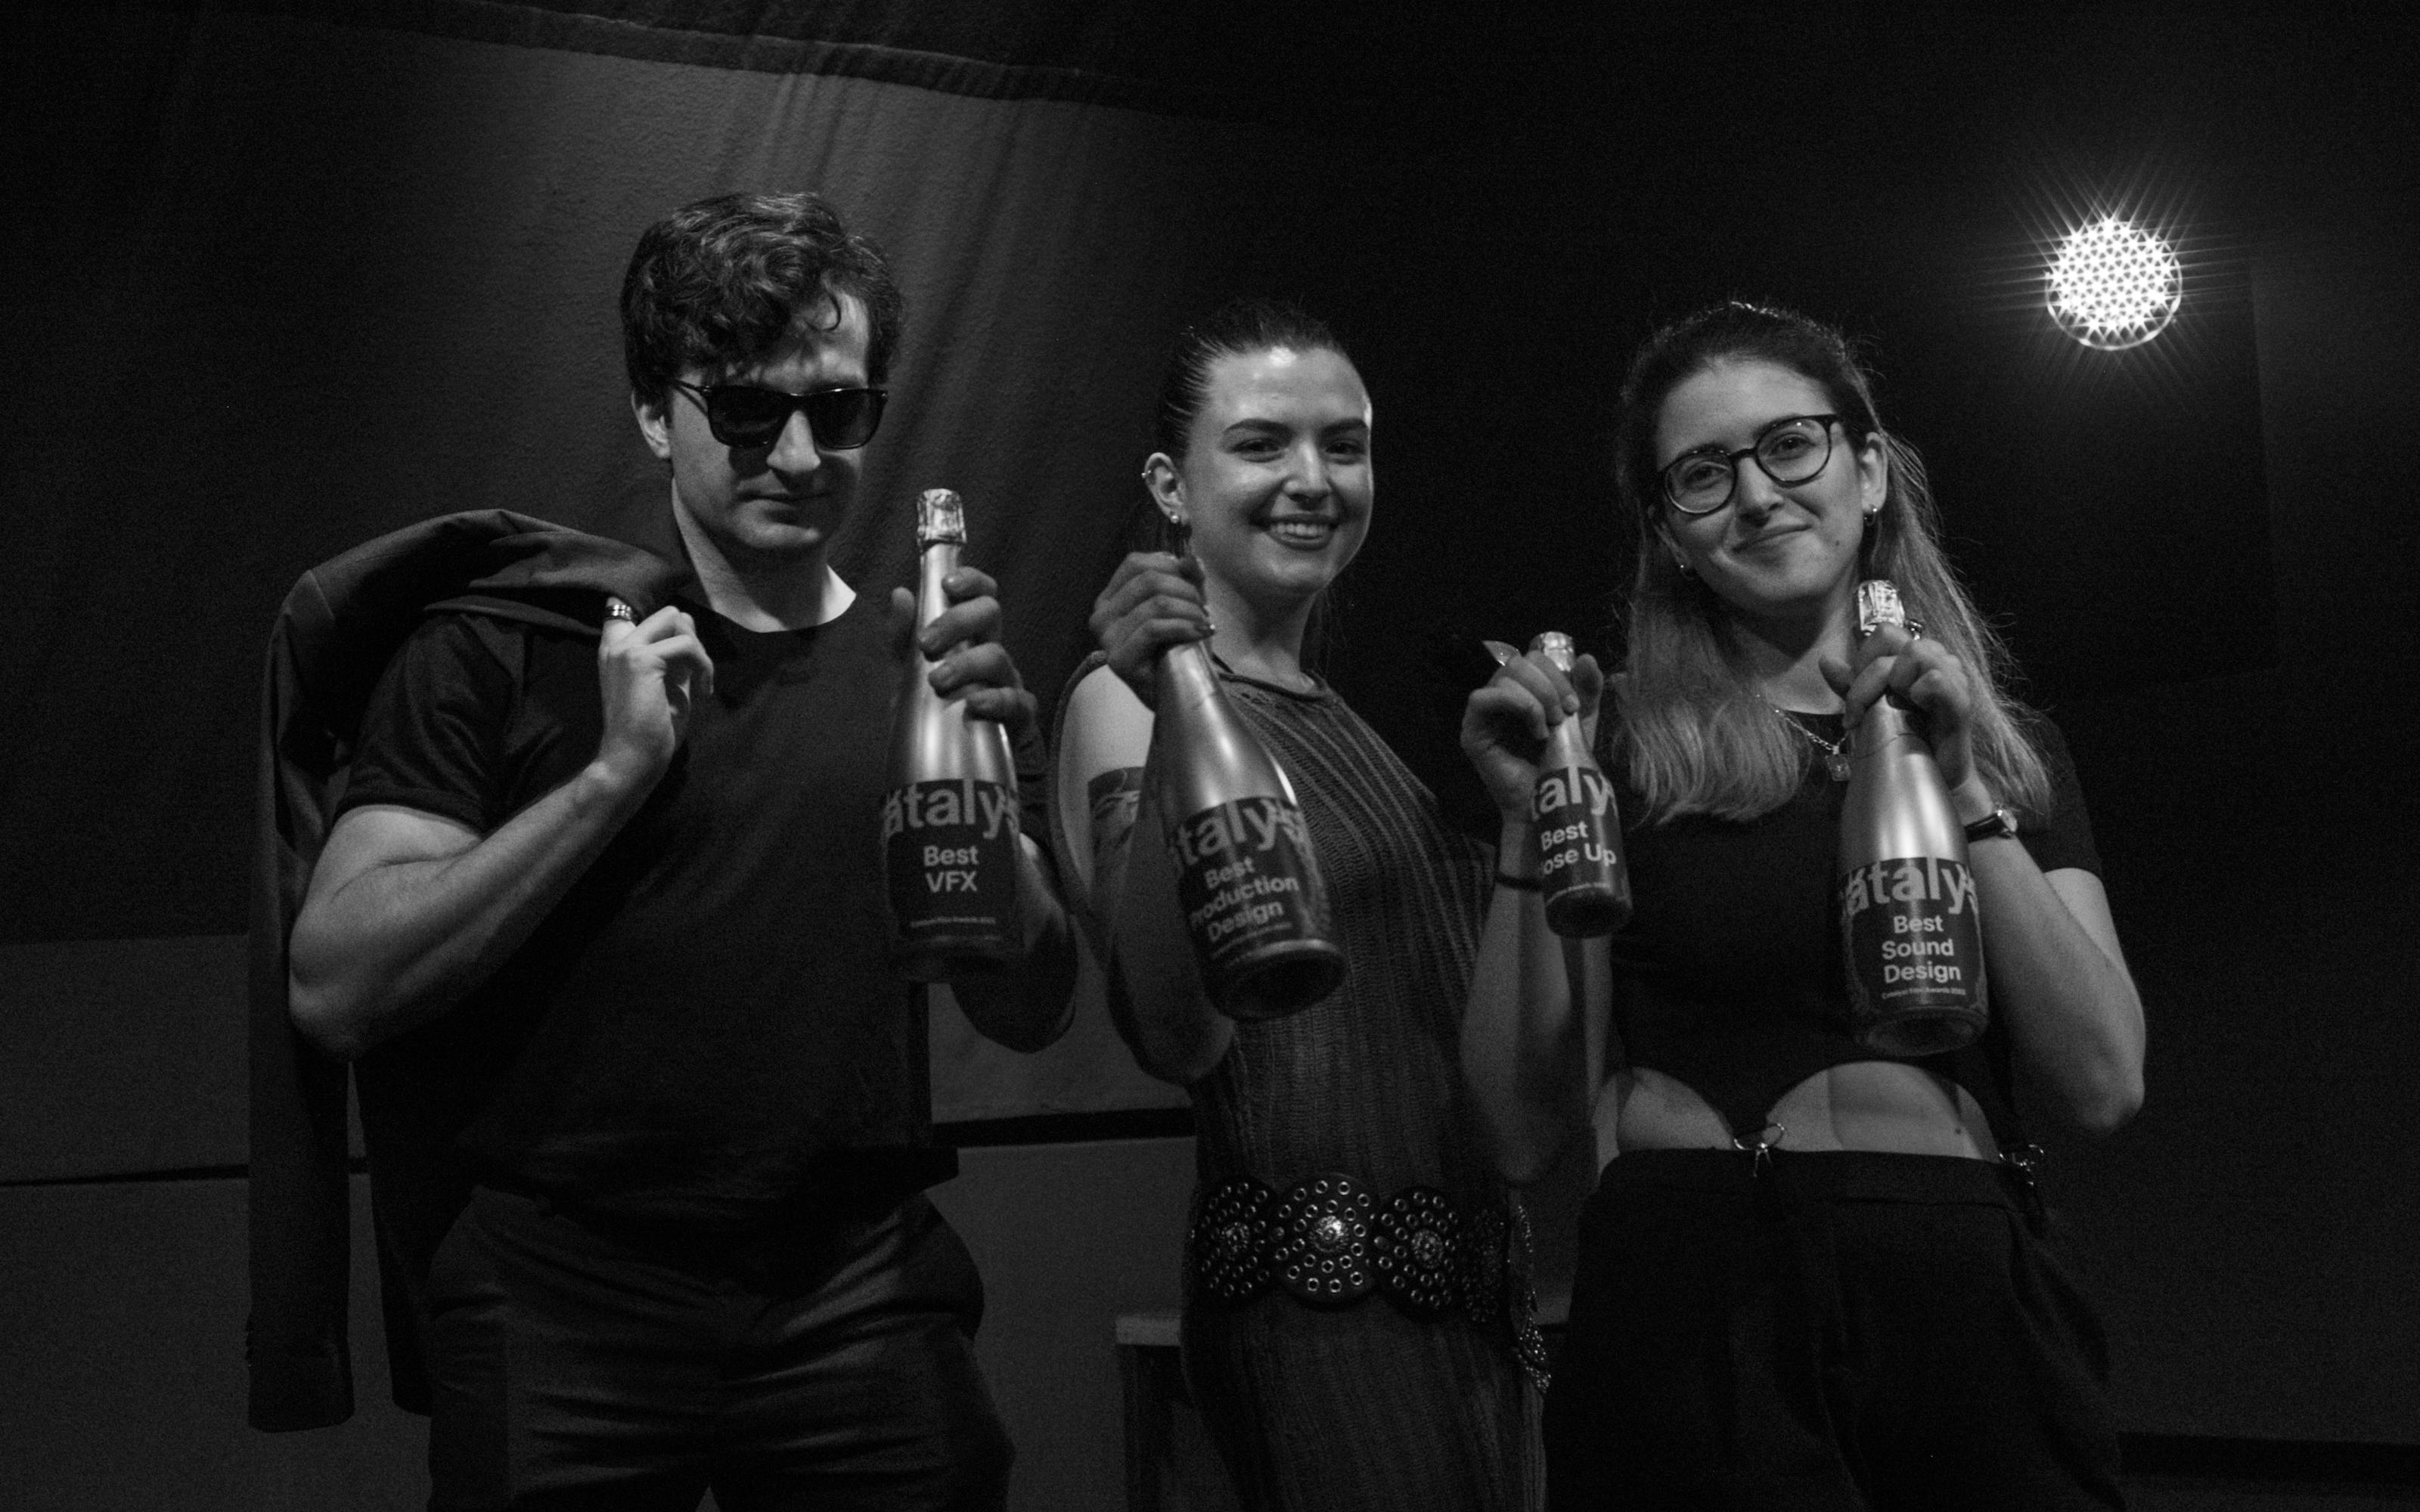 Alexandro, Sara and Francesca pose with their awards